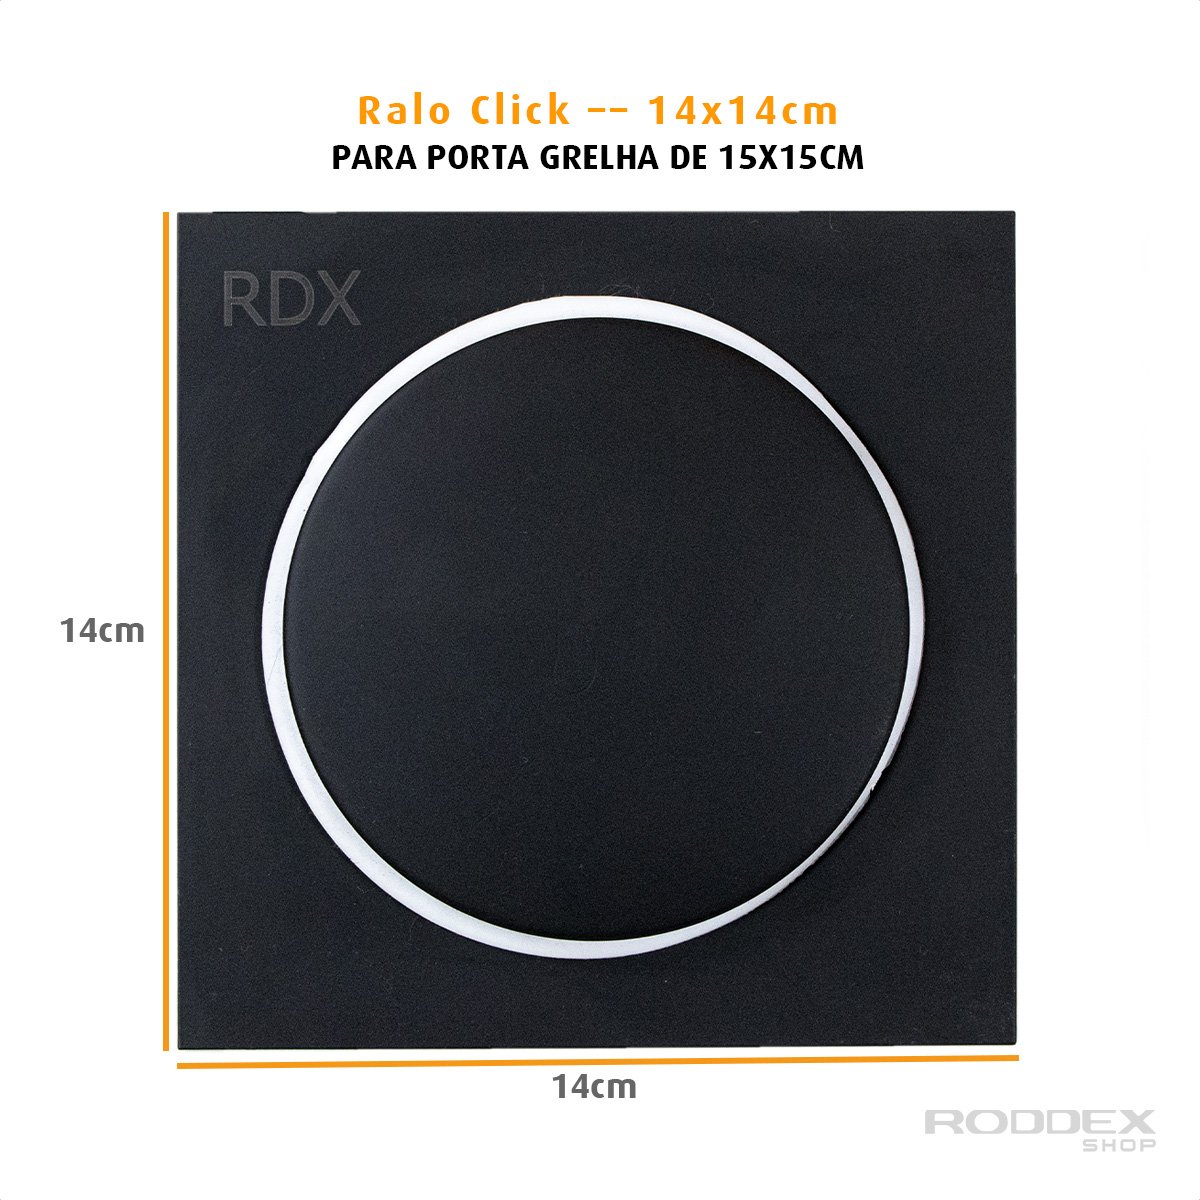 Ralo Click Quadrado 15x15 Metal Preto Fosco RDX - 2